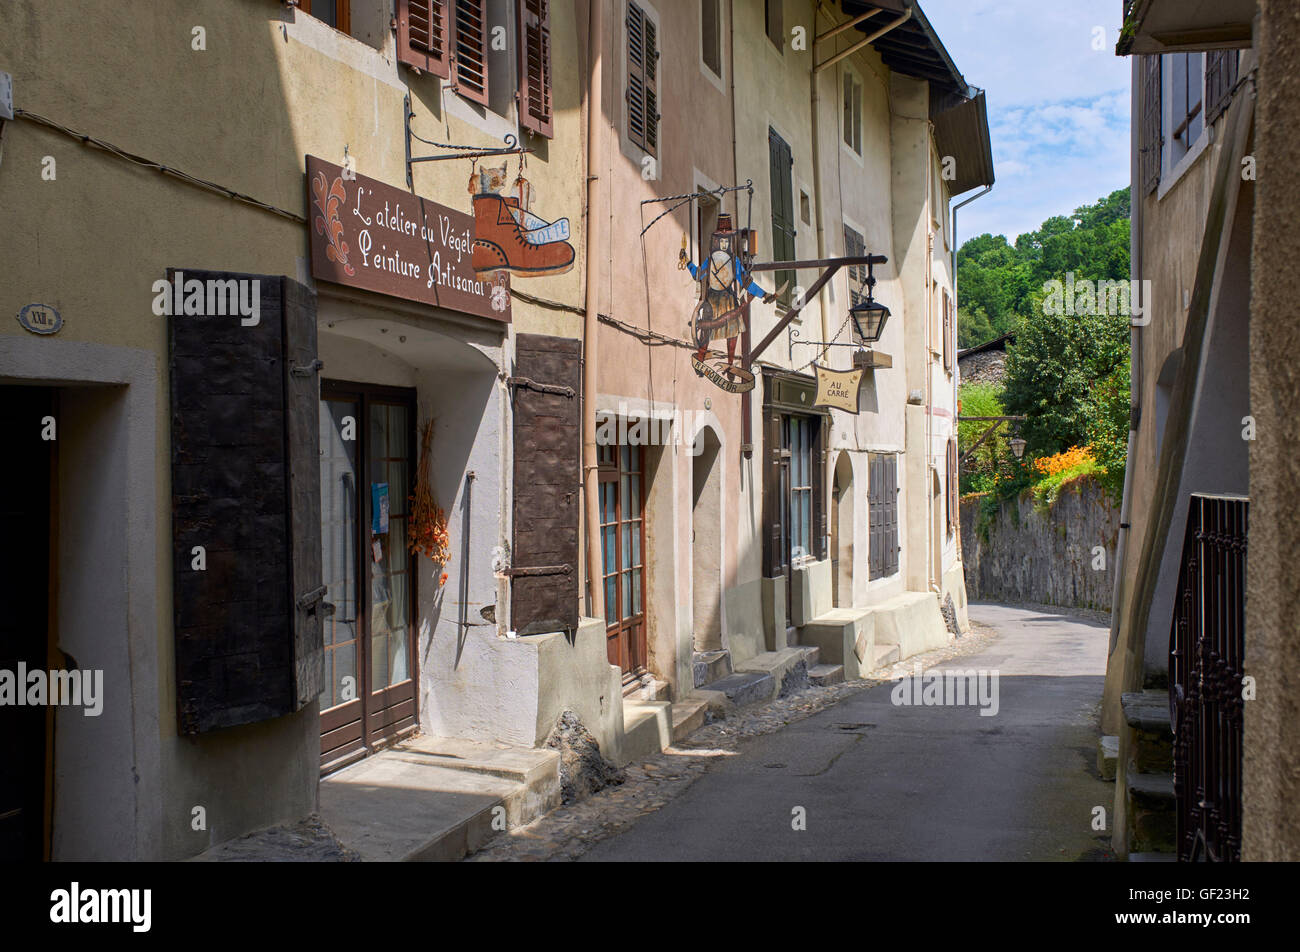 Shops in the medieval village of Conflans.  Albertville, Savoie, France. Stock Photo